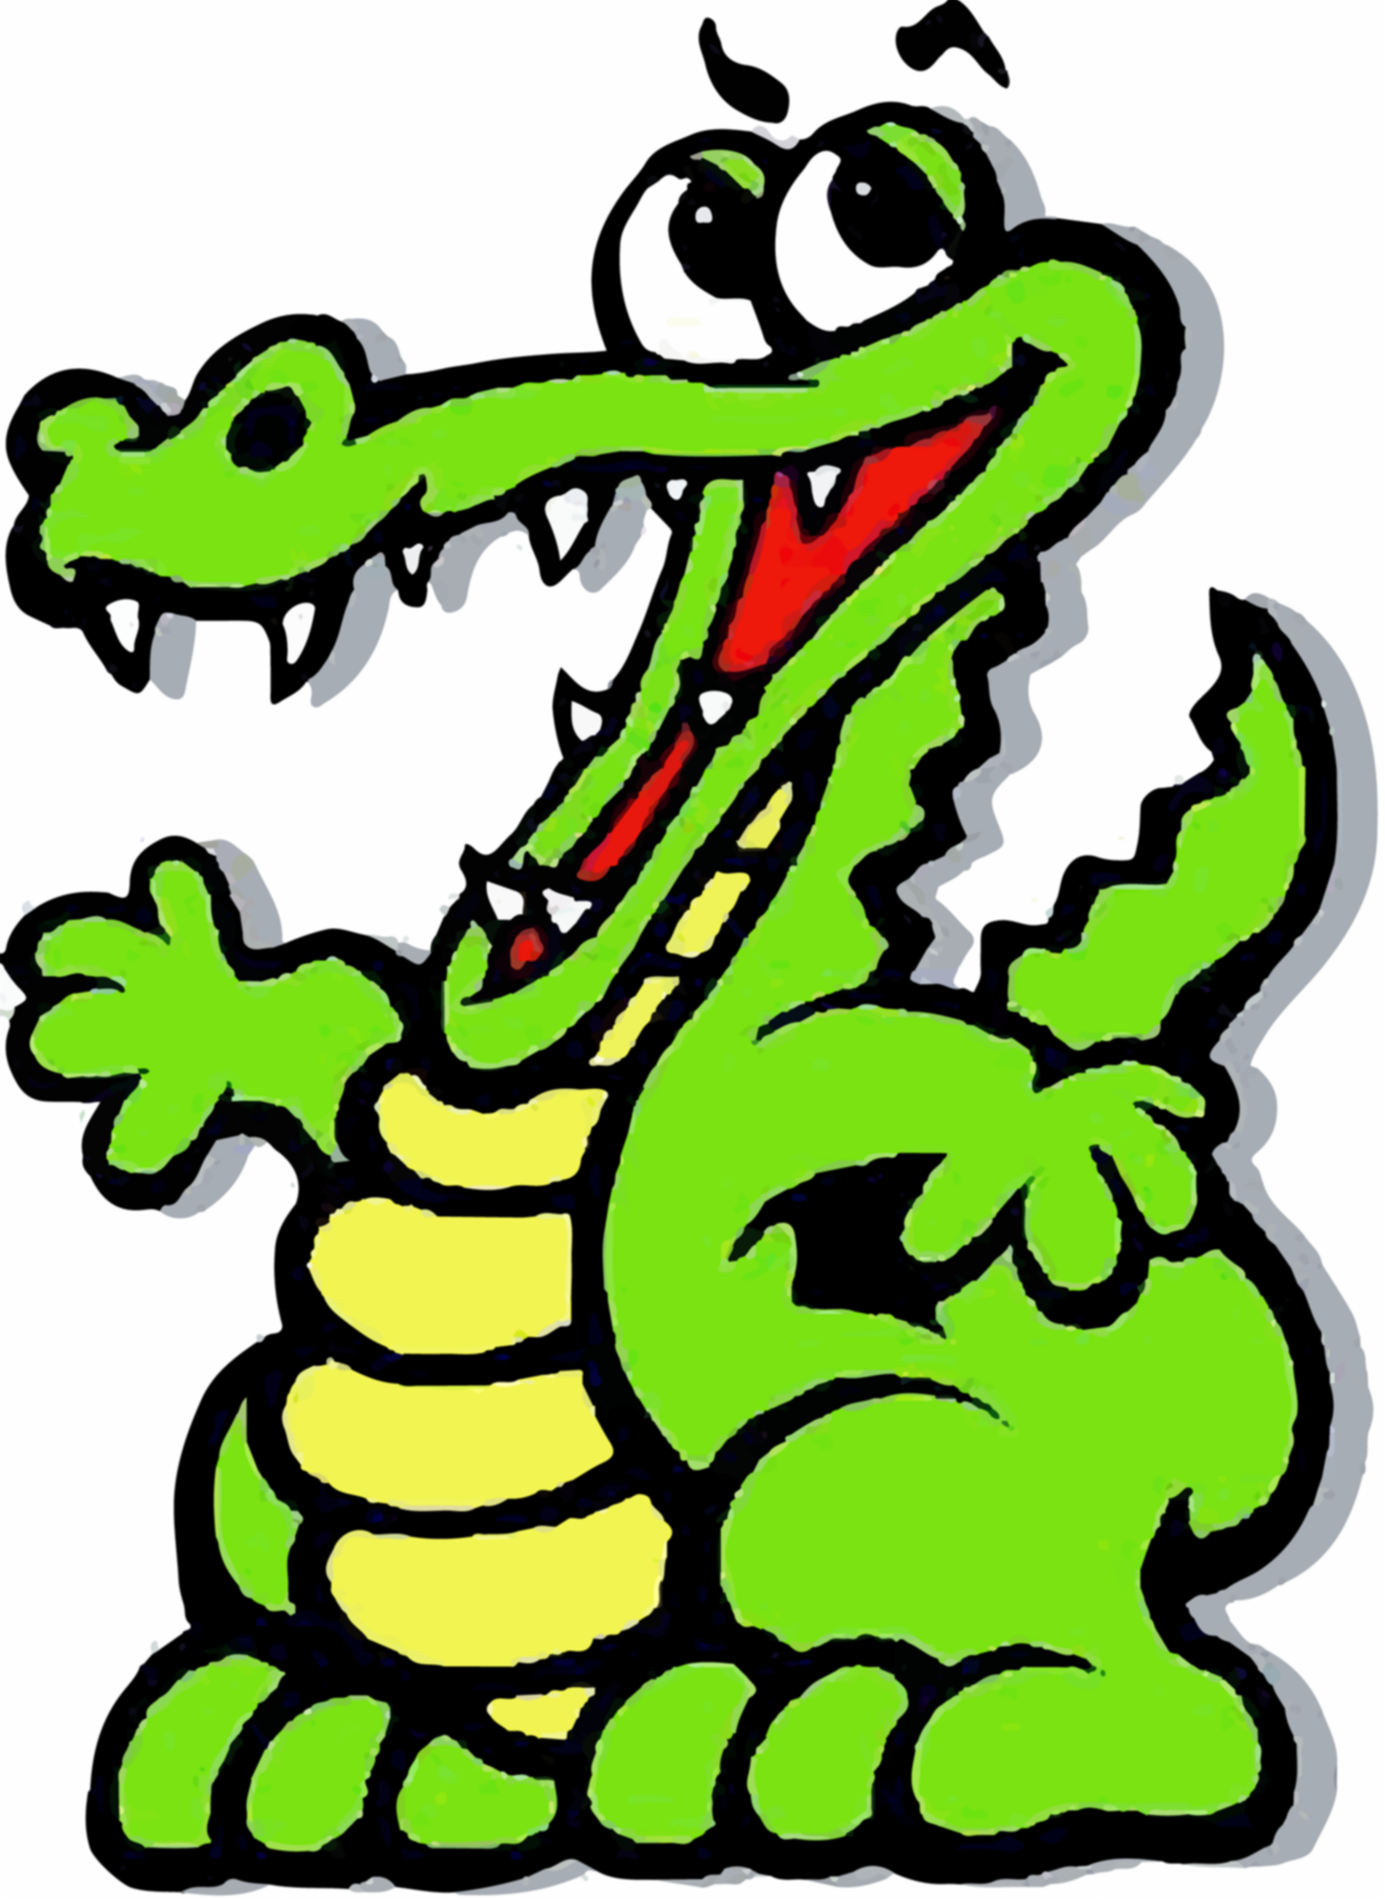 Jamaica Elementary logo - Crocodile mascot